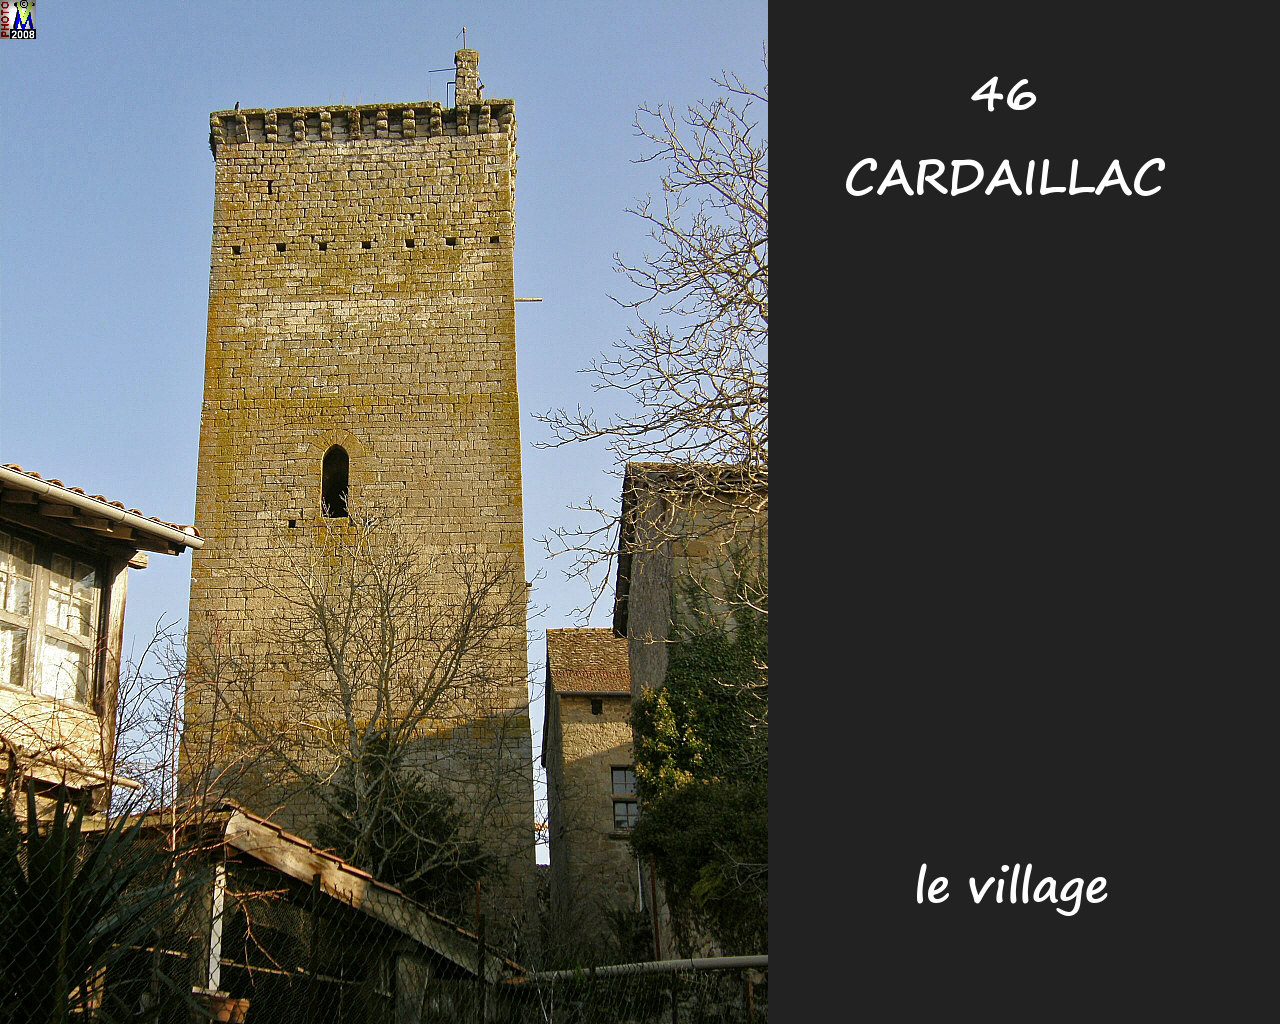 46CARDAILLAC_village_124.jpg